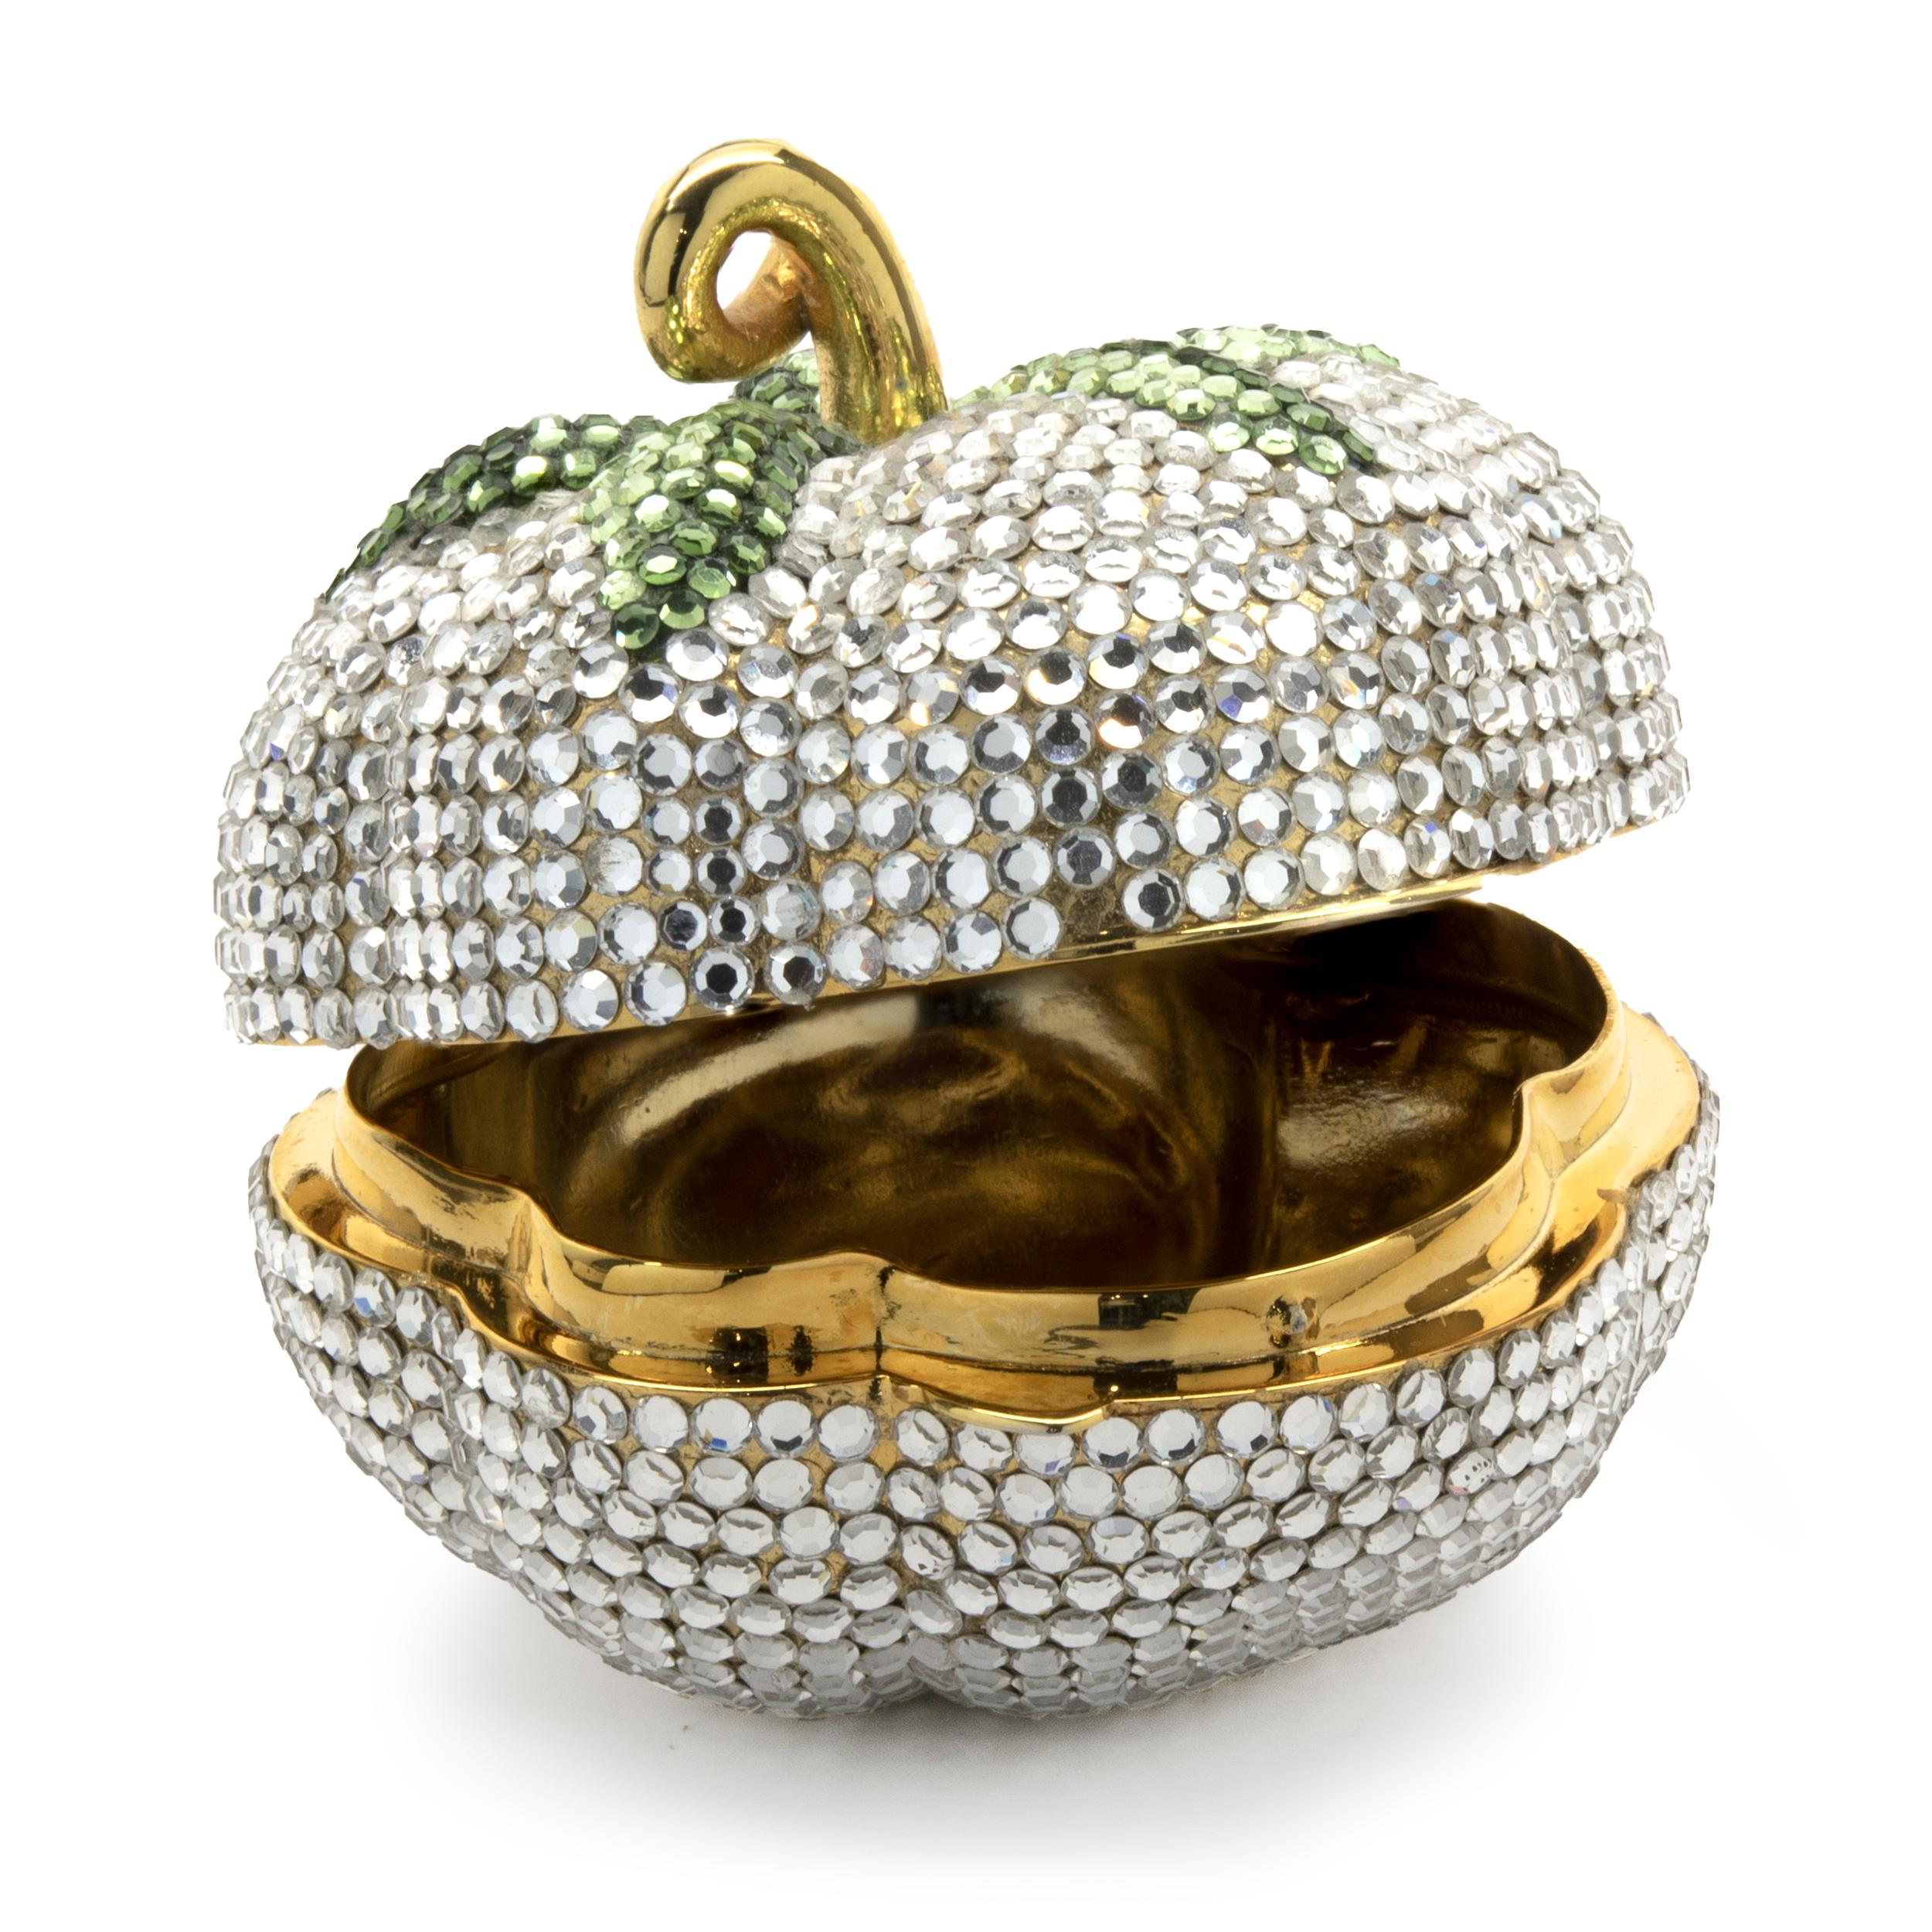 Designer: Judith Leiber
Material: green / clear crystal
Weight:  45.15 grams
Dimensions: pumpkin measures 50.5 X 48.8mm
